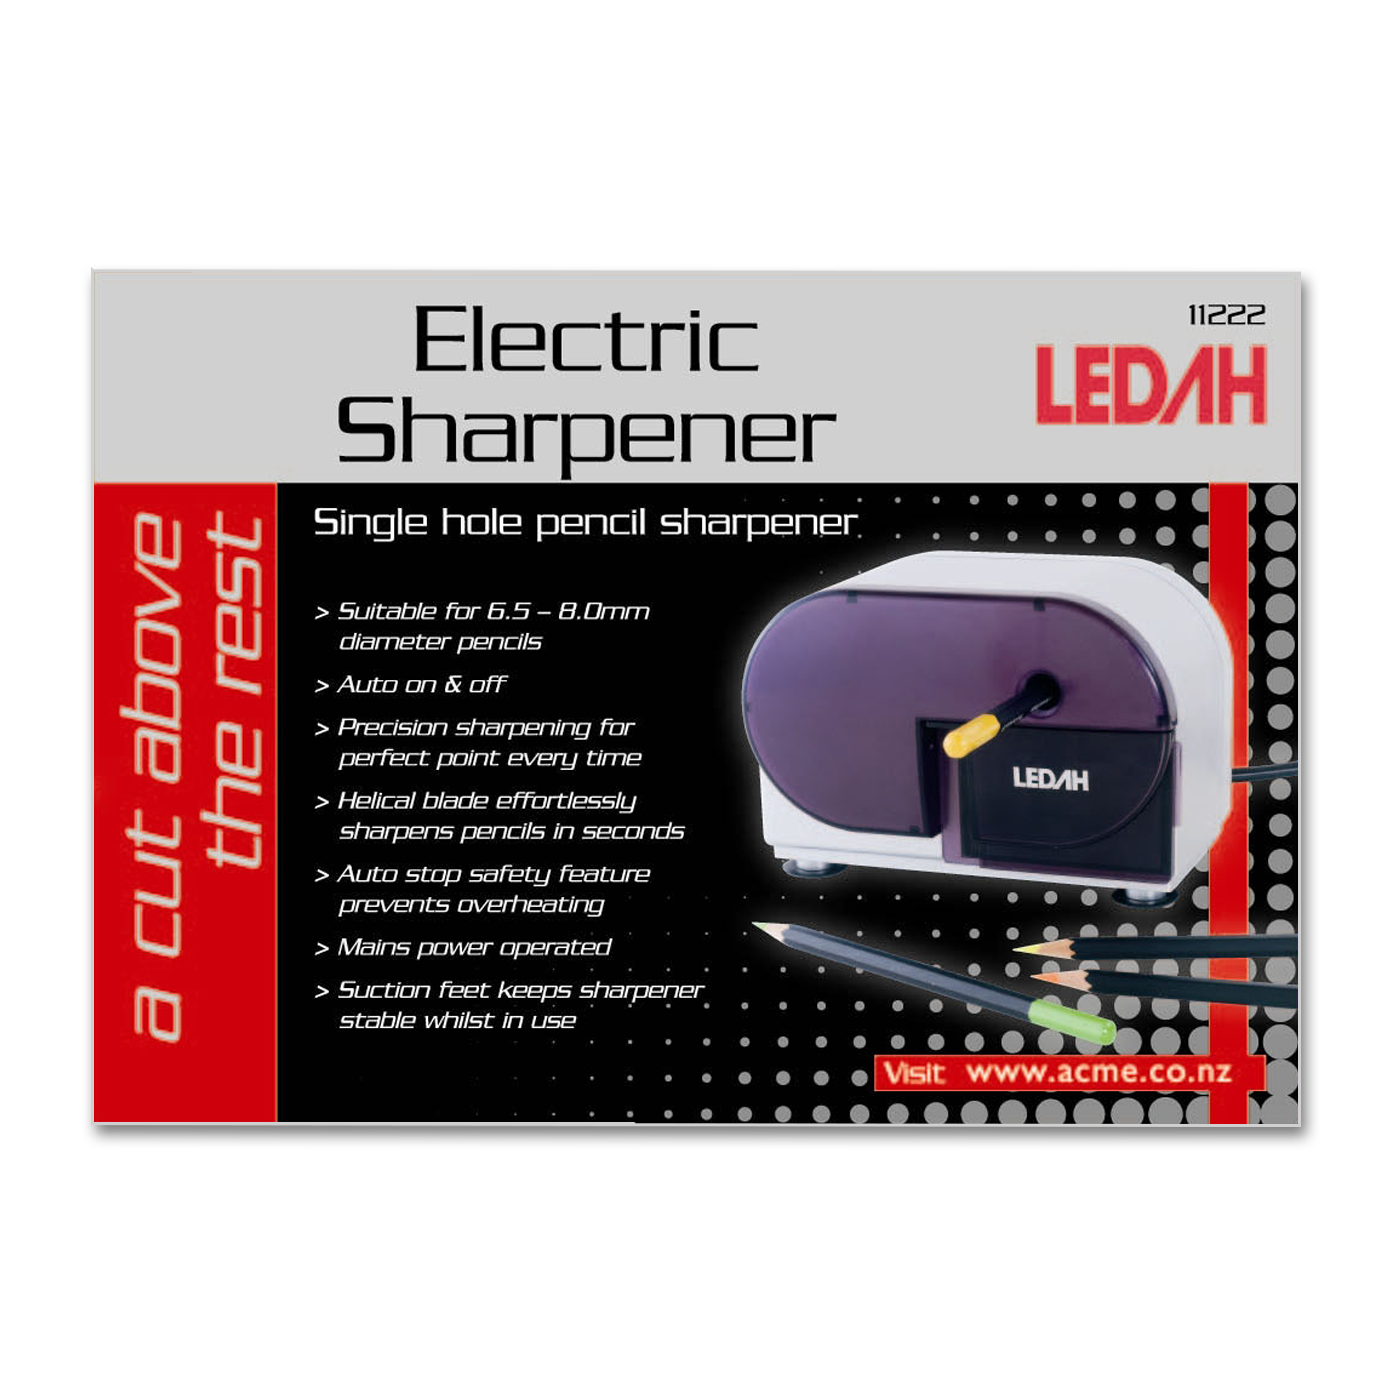 LEDAH ELECTRIC PENCIL SHARPENER